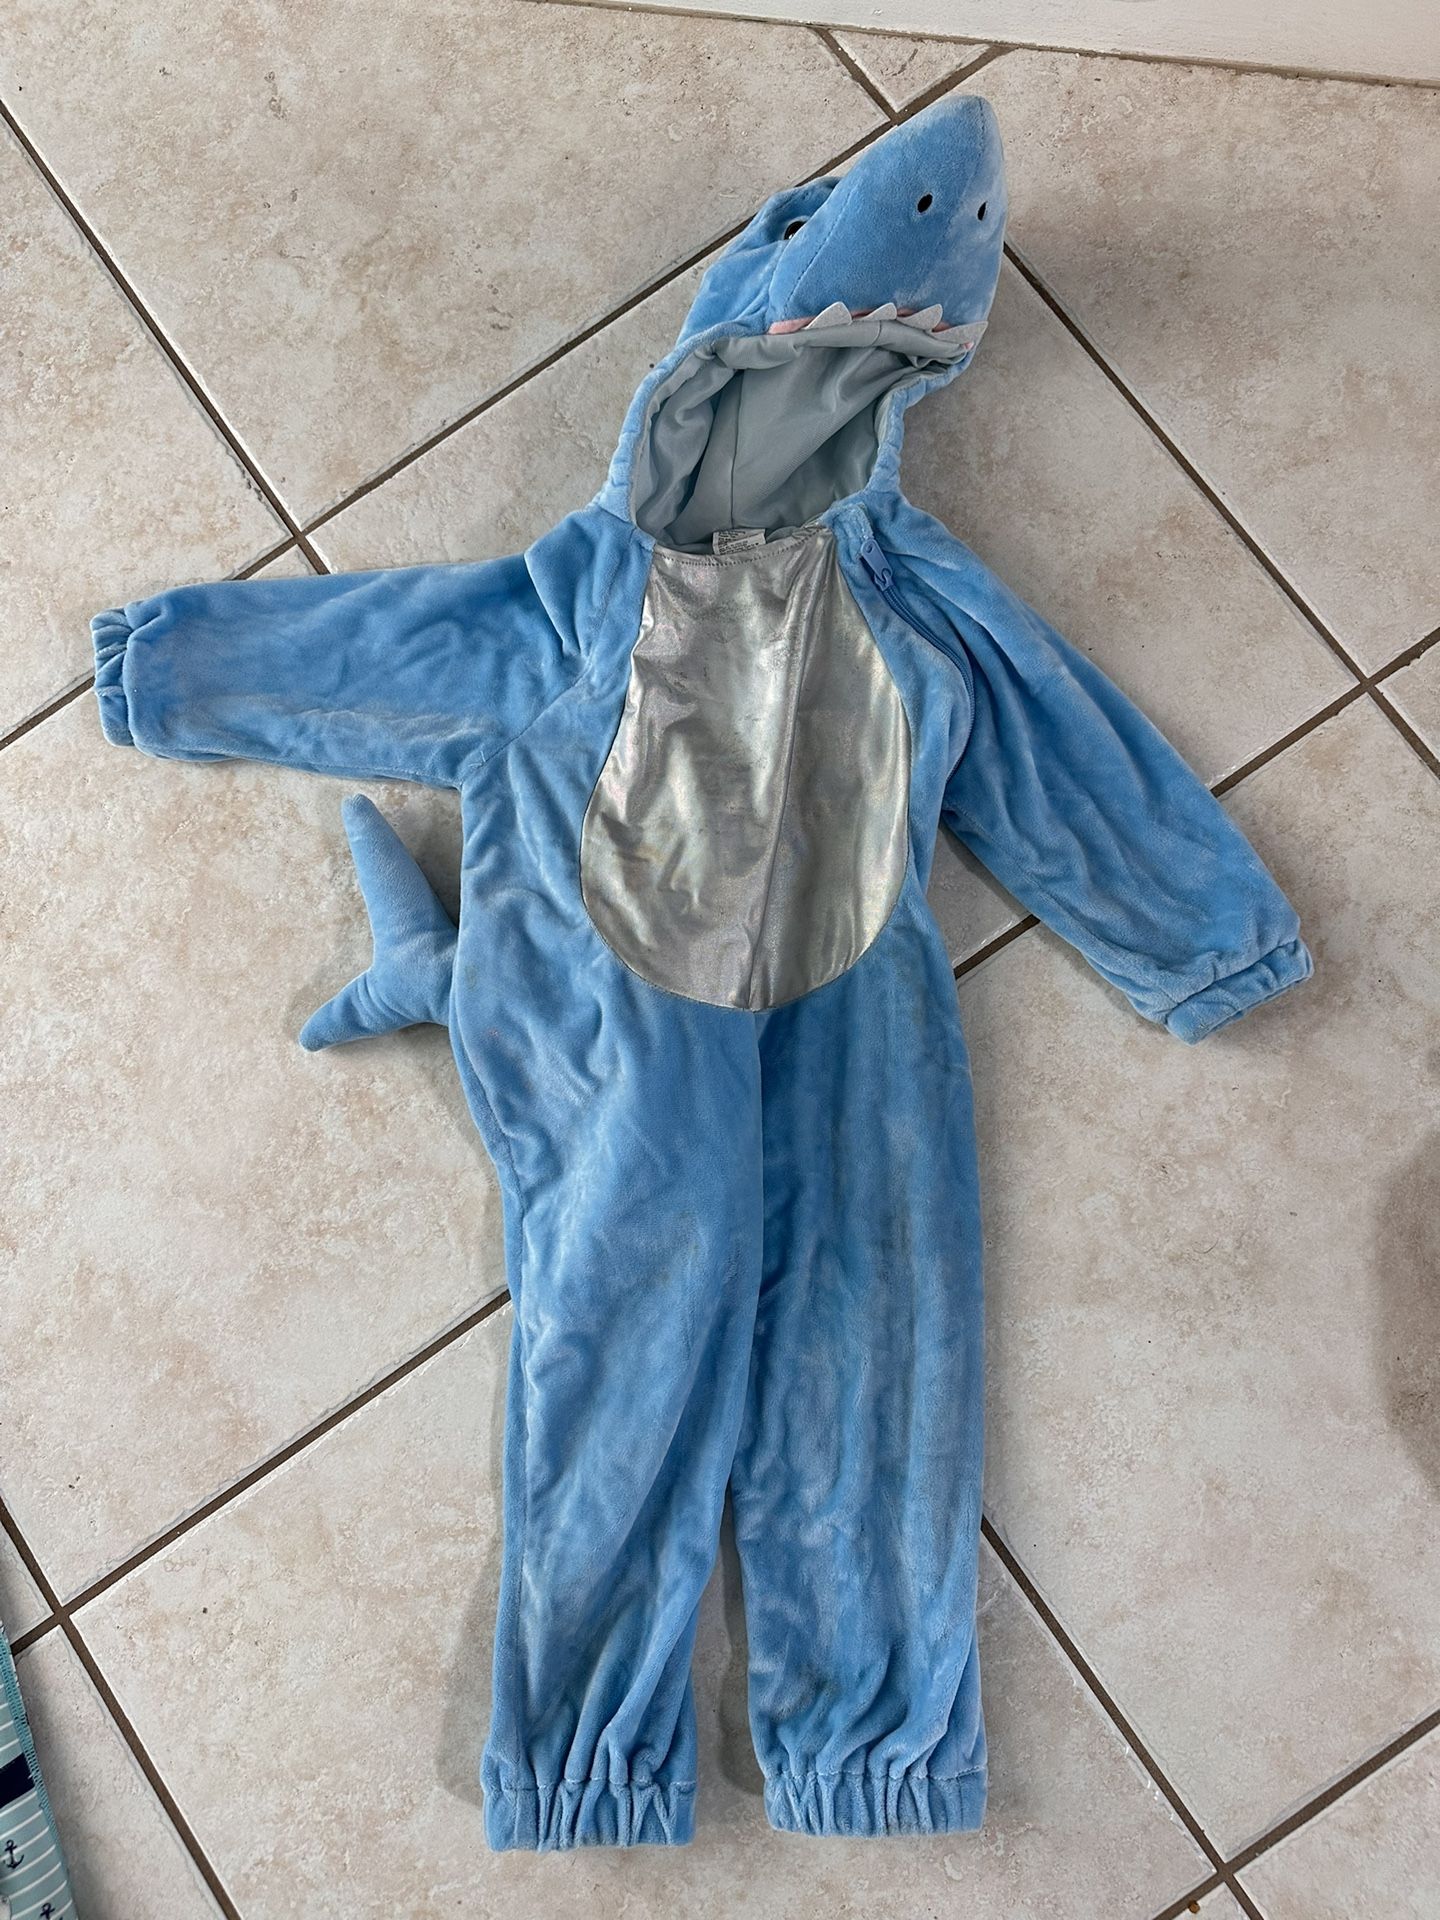 Shark Costume - Toddler 18-24mo